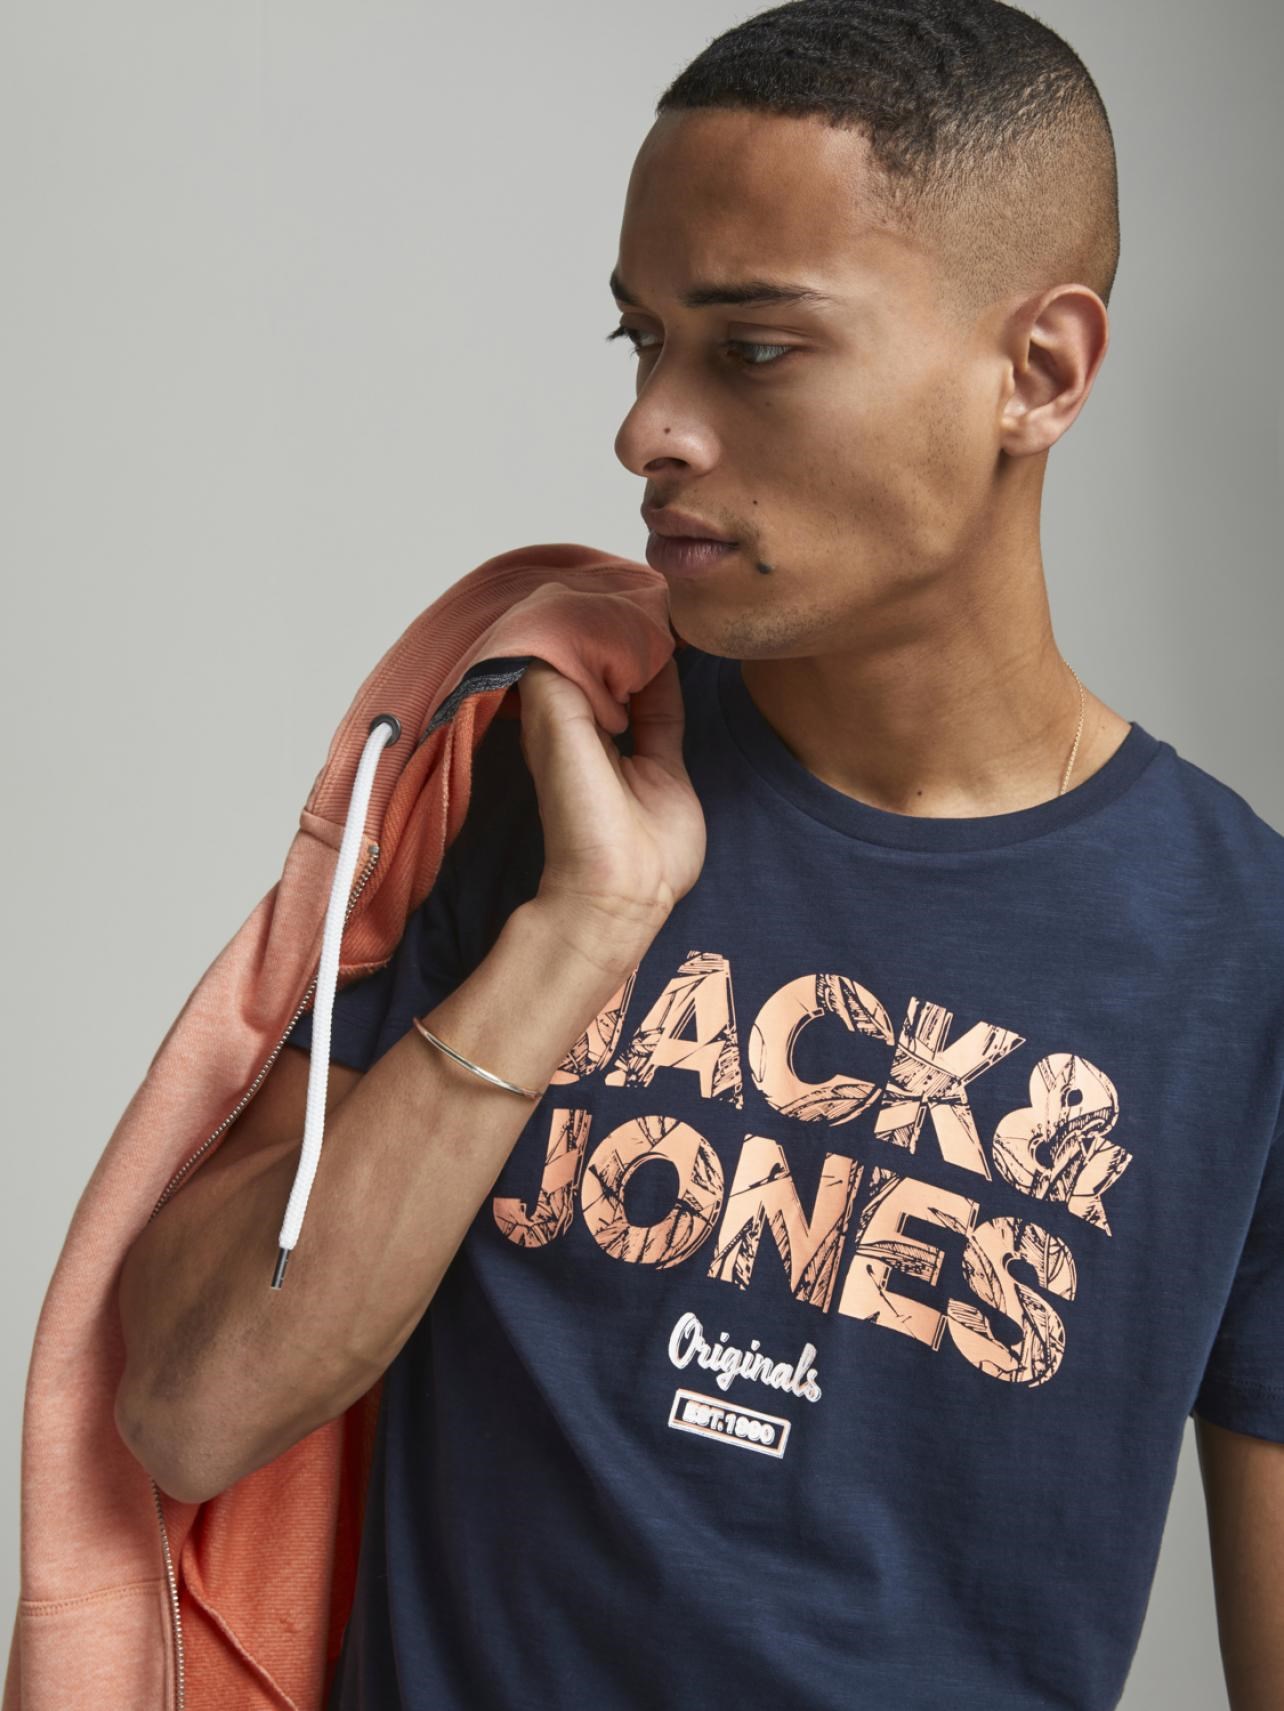 Jack Jones Erkek T-Shirt 12186282 Navy Blazer